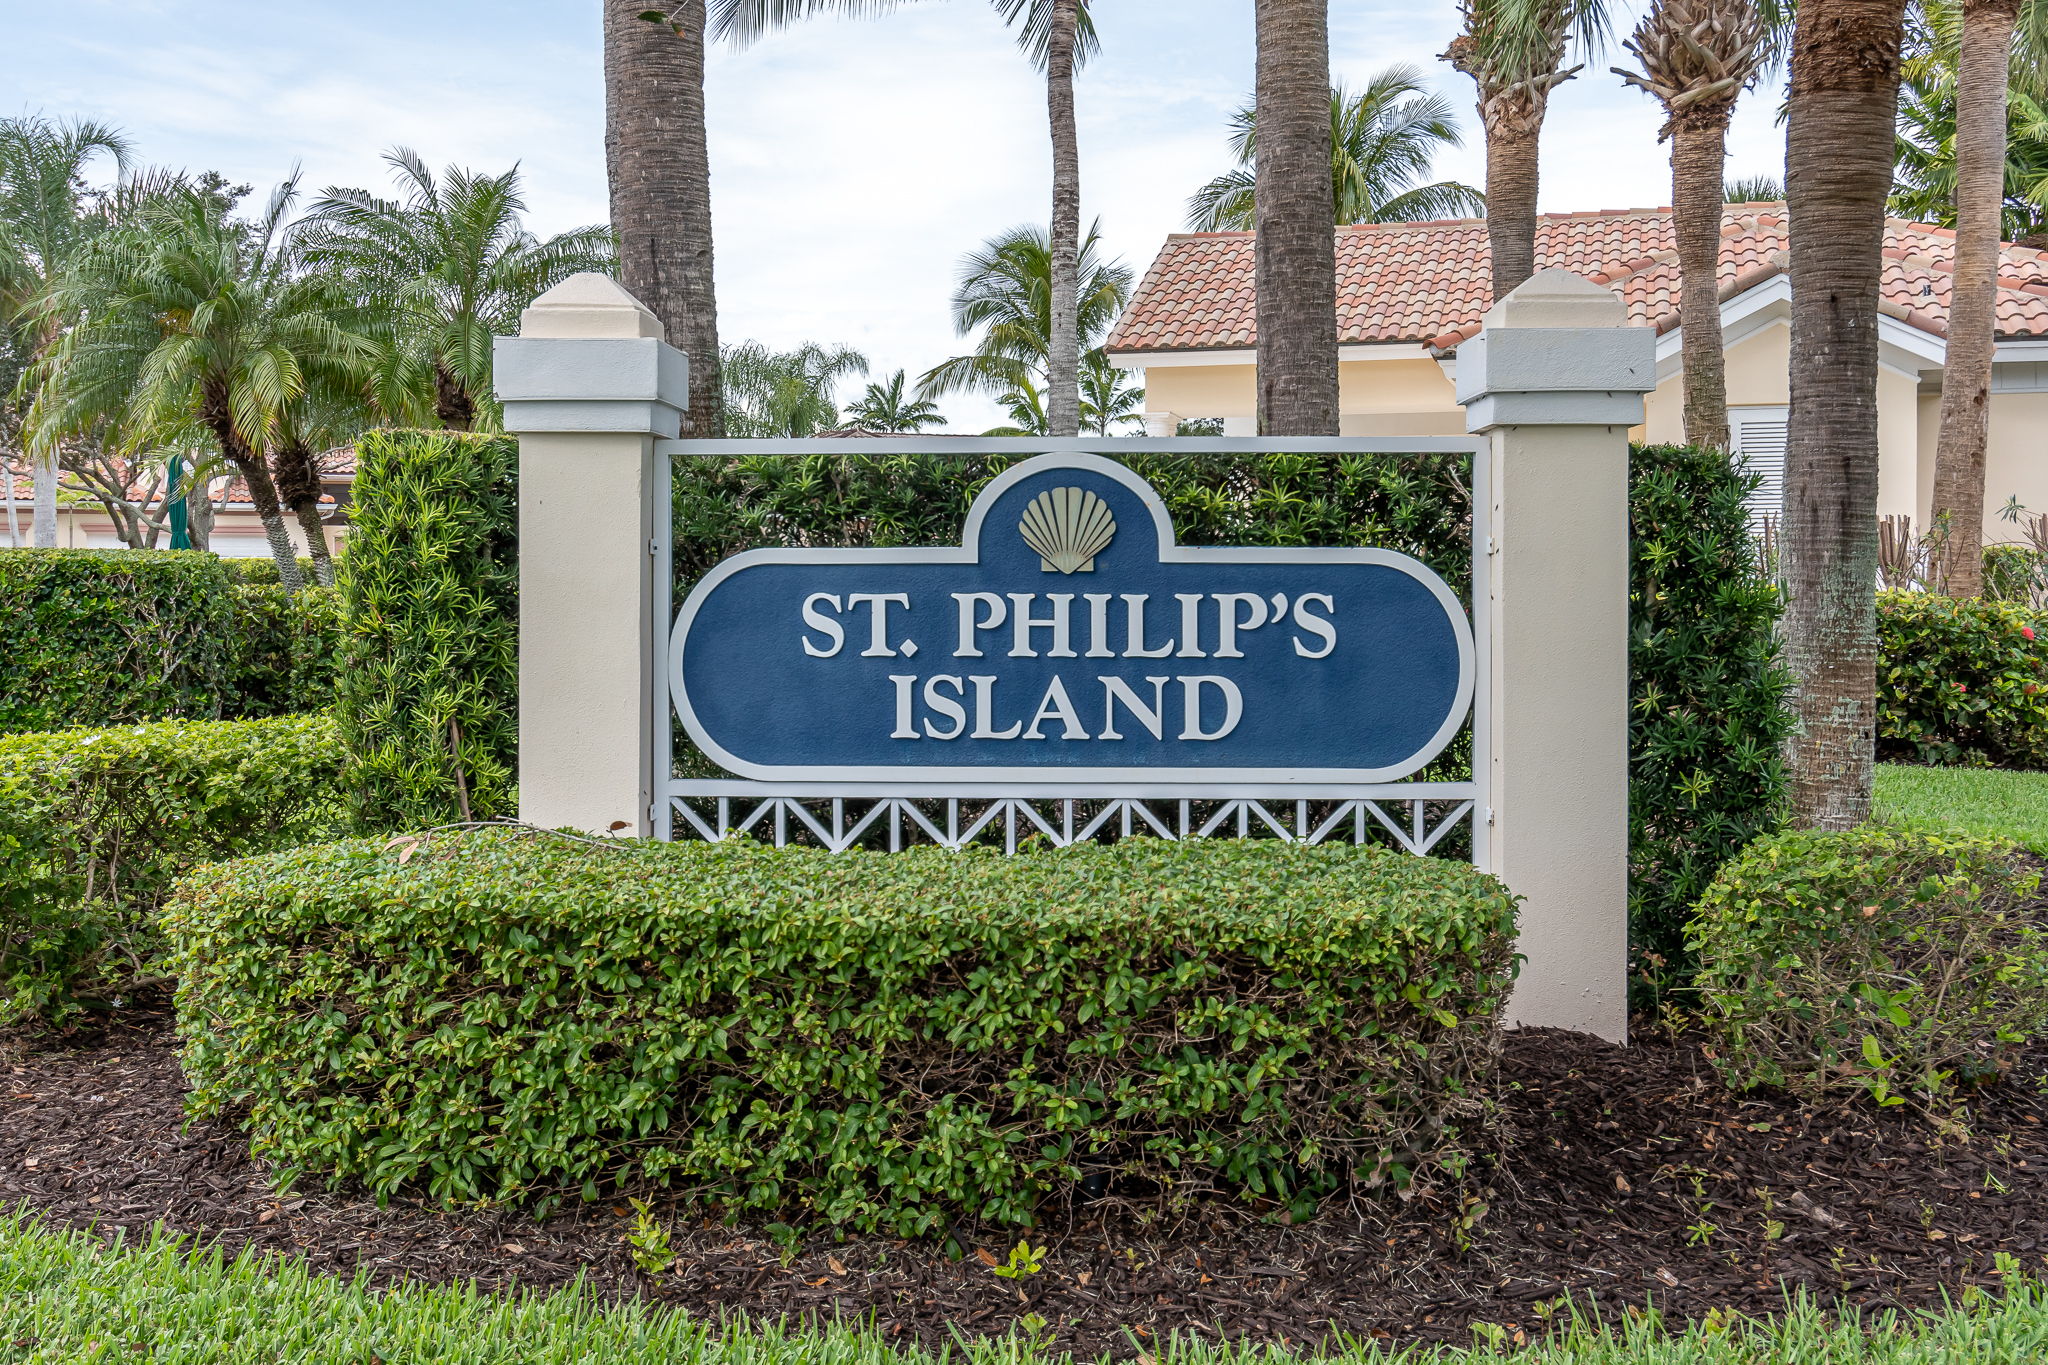  5115 St Philips Island Ln, Vero Beach, FL 32967, US